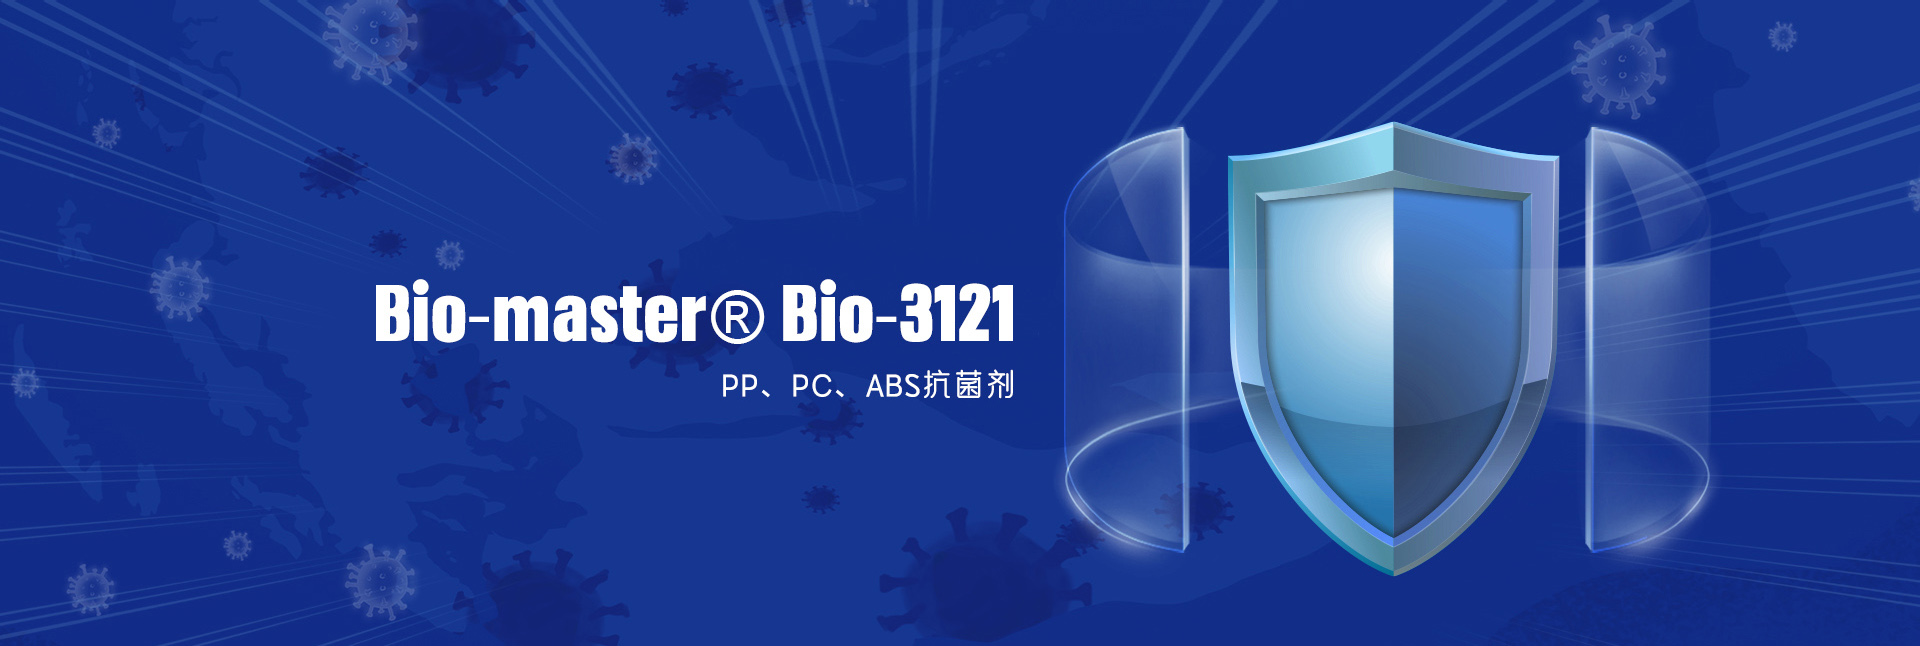 banner-Bio-02